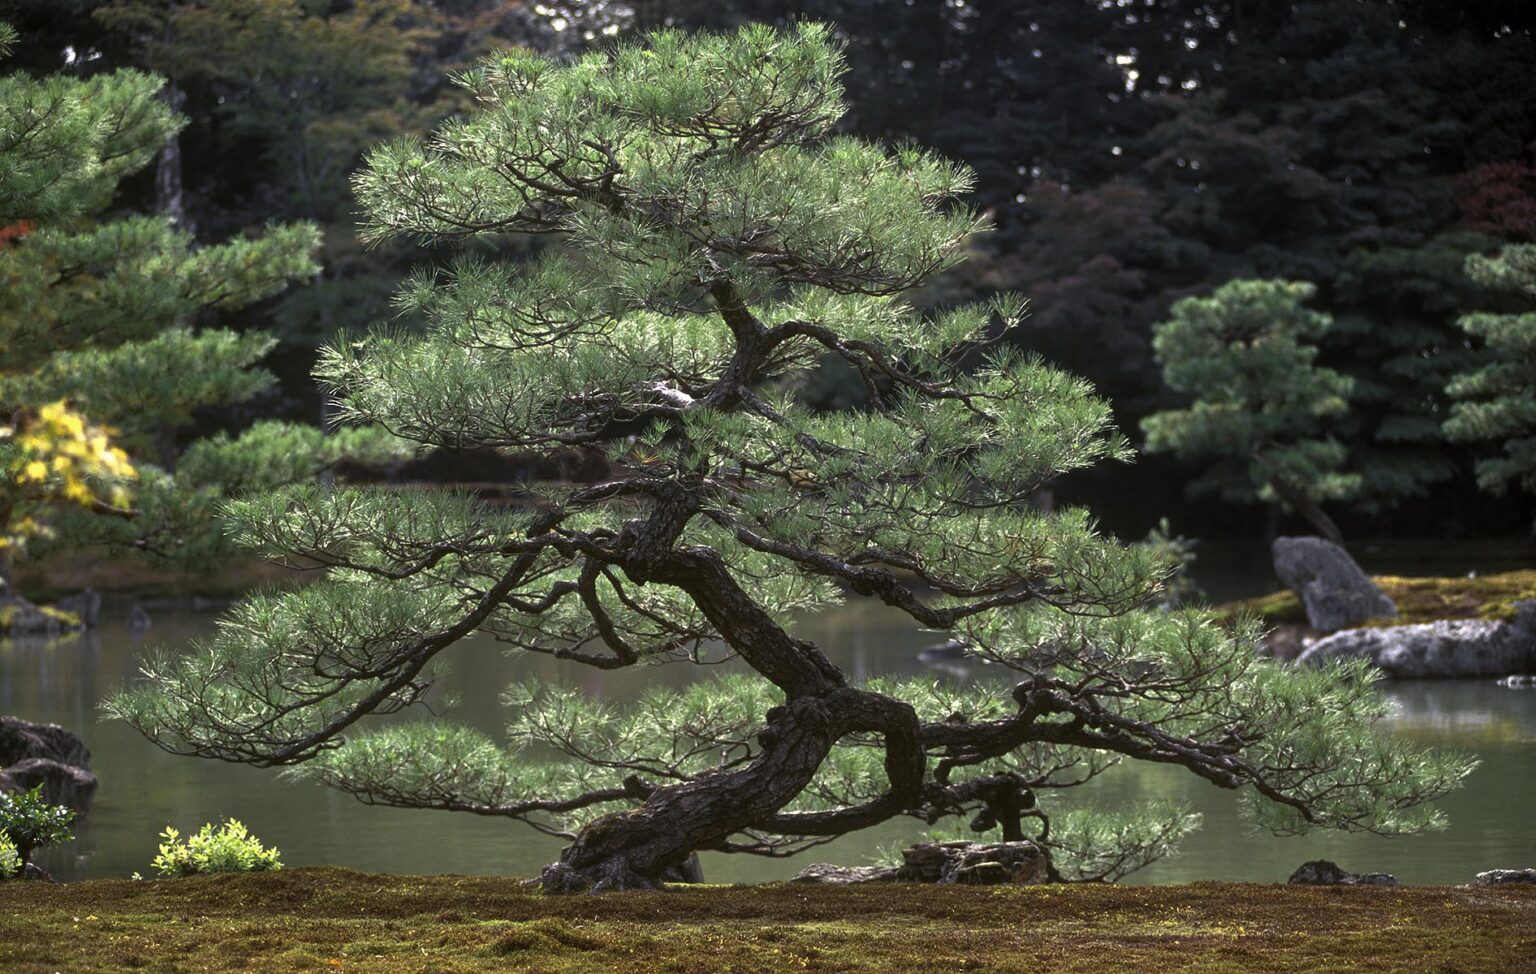 Beautifully formed PINE TREE in the garden of KINKAKUJU, THE GOLDEN PAVILLION - KYOTO, JAPAN